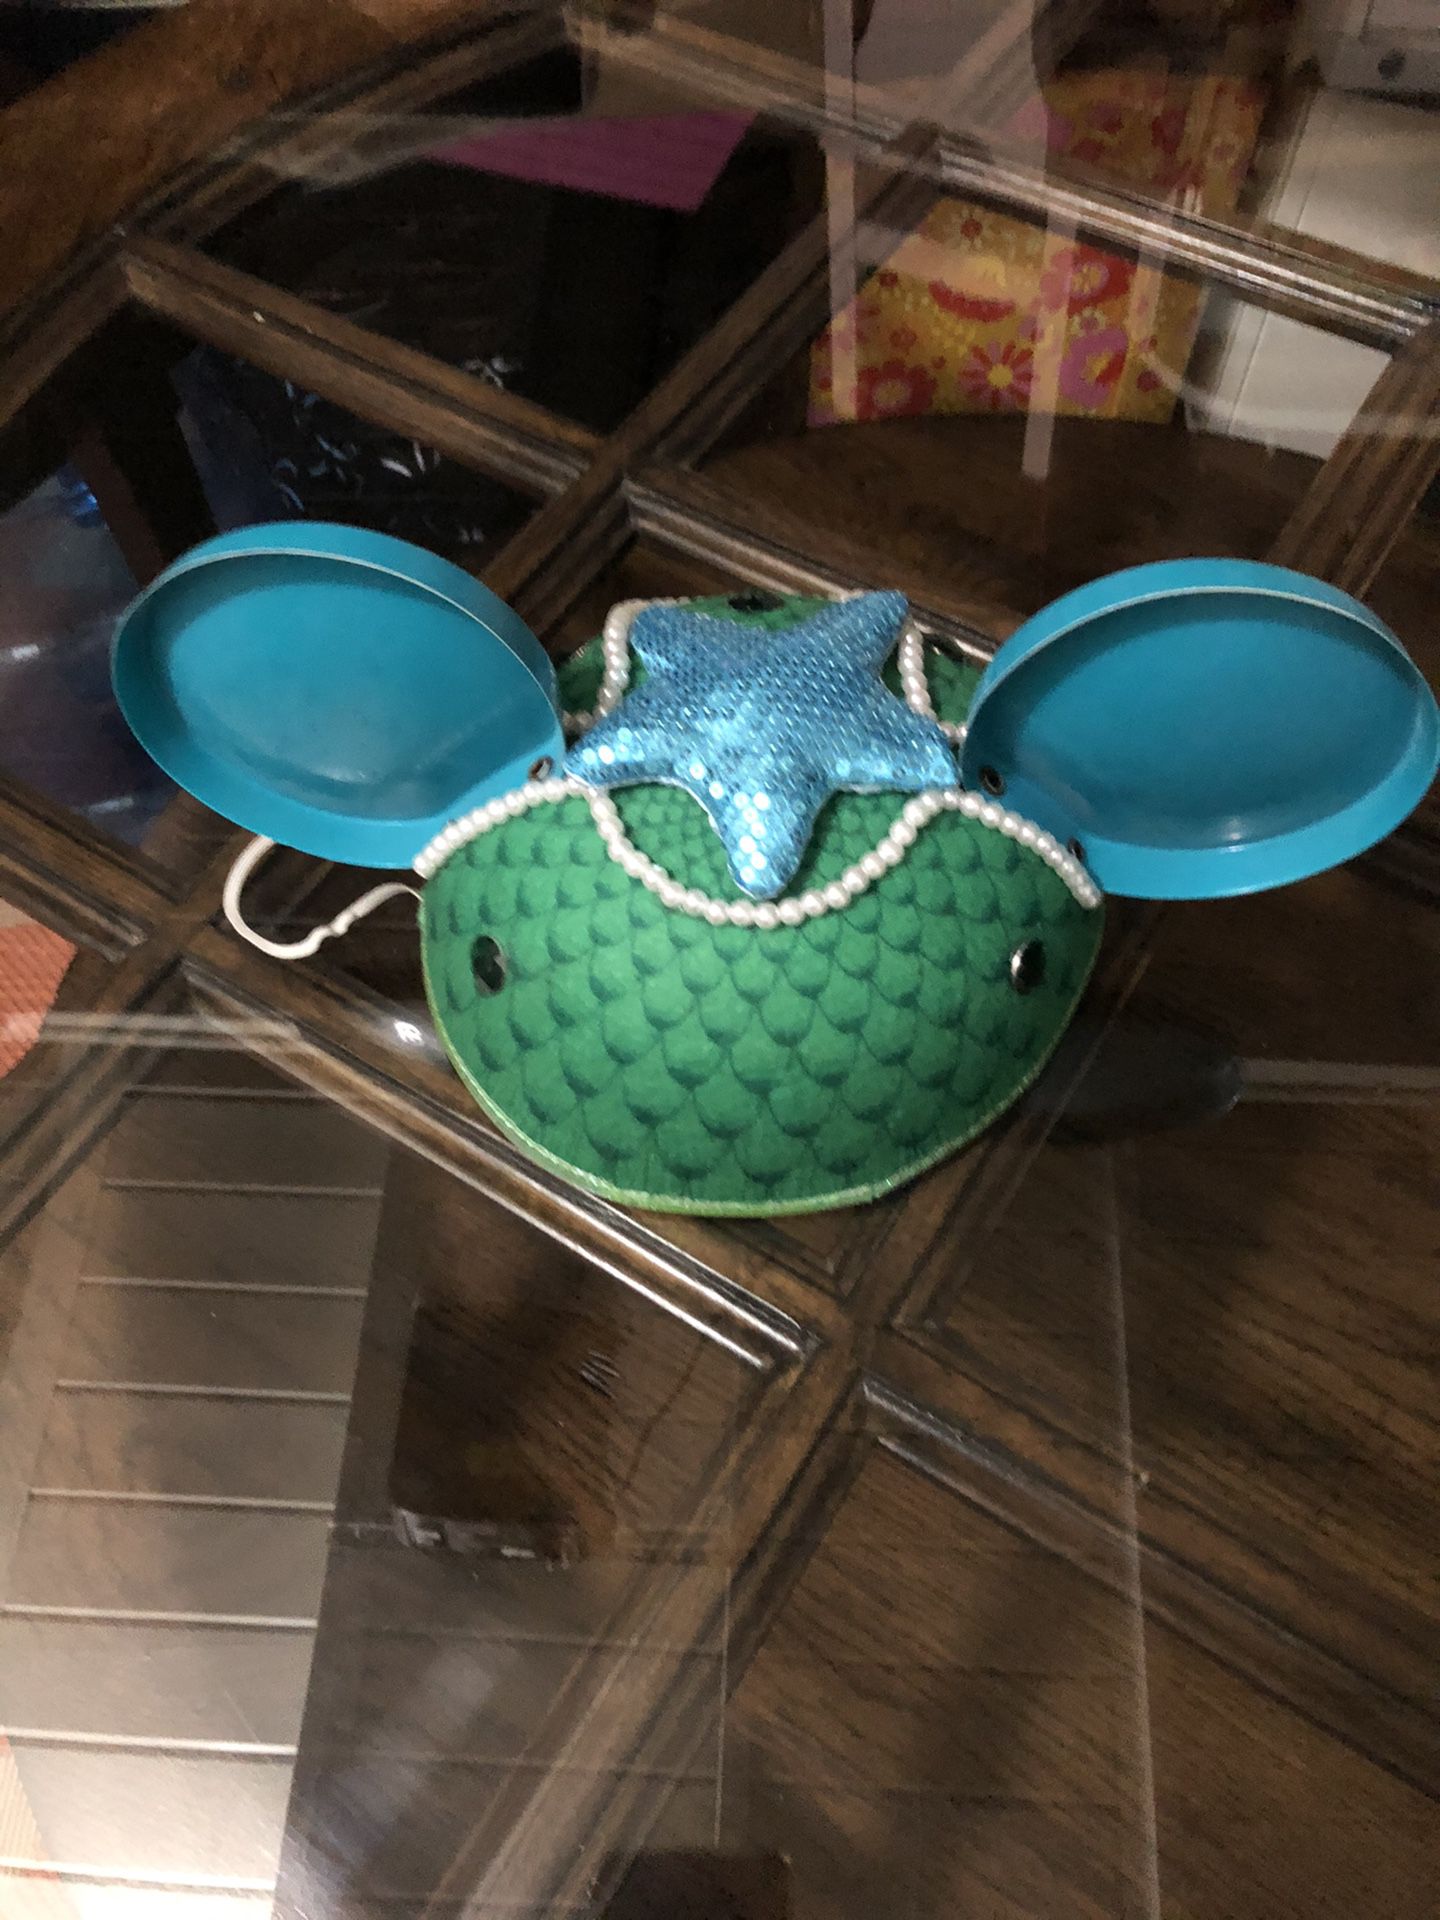  Little Mermaid Mickey/Minnie Ears